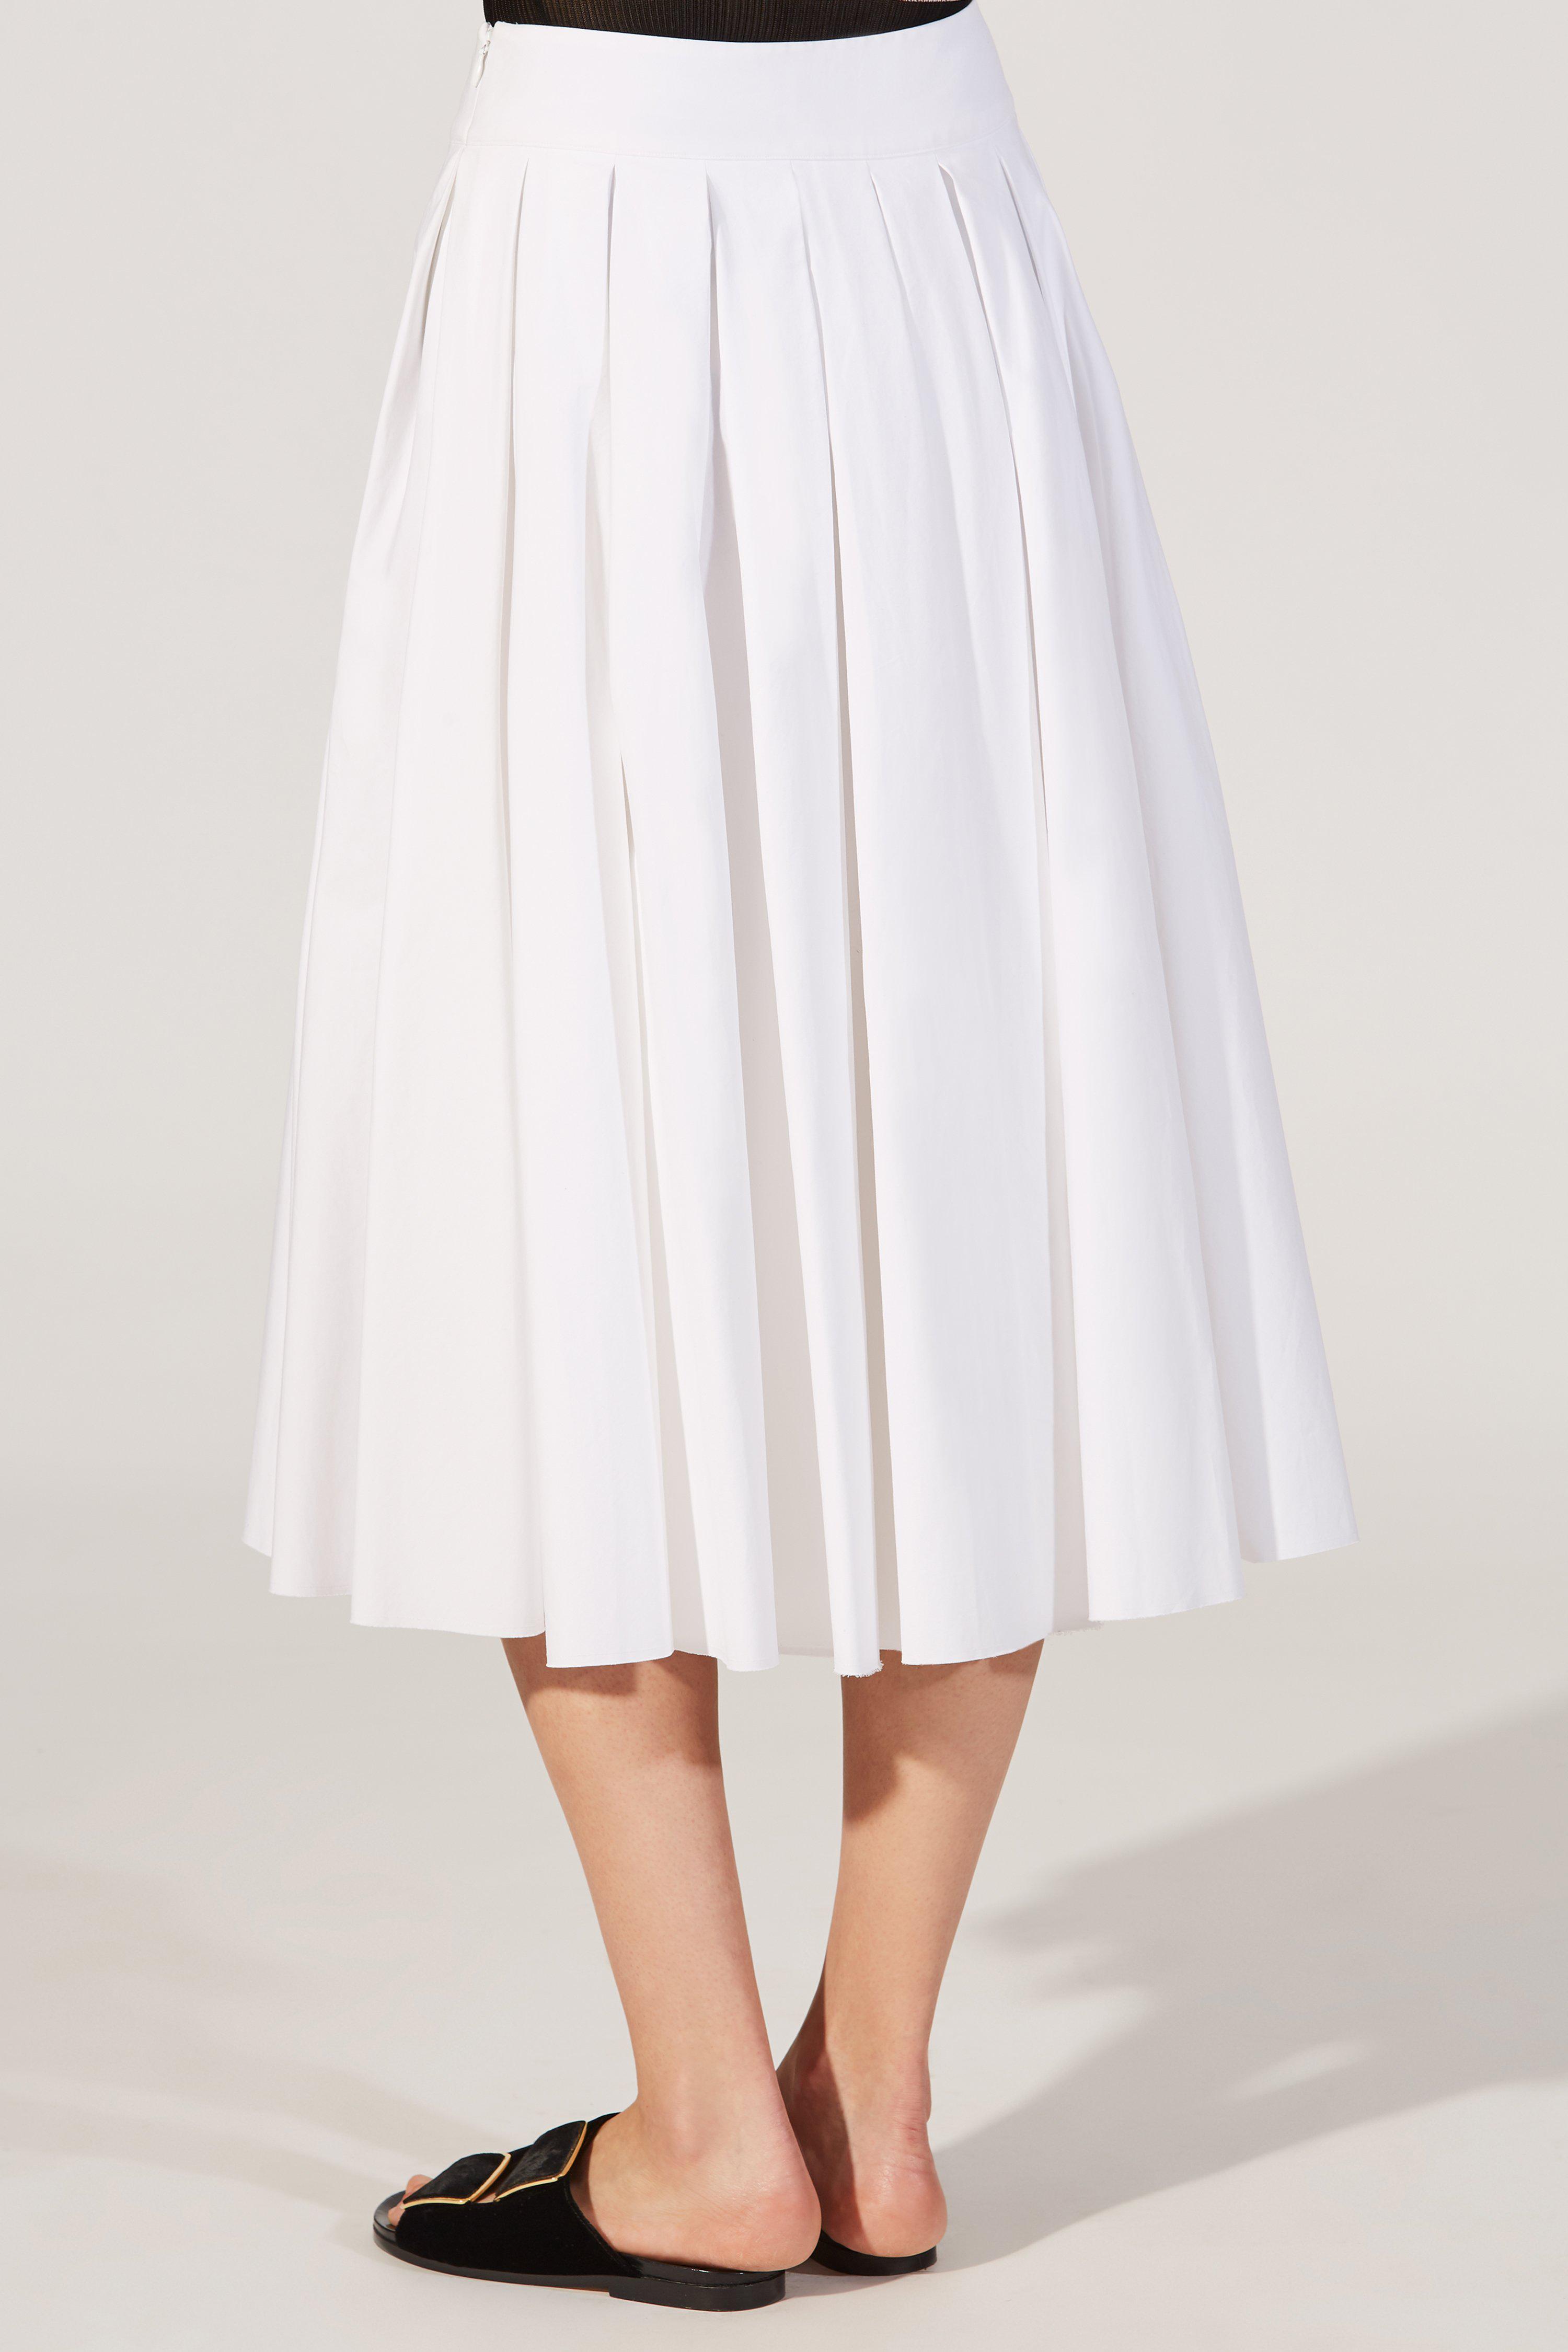 Khaite Cotton The Alexa Skirt in White - Lyst